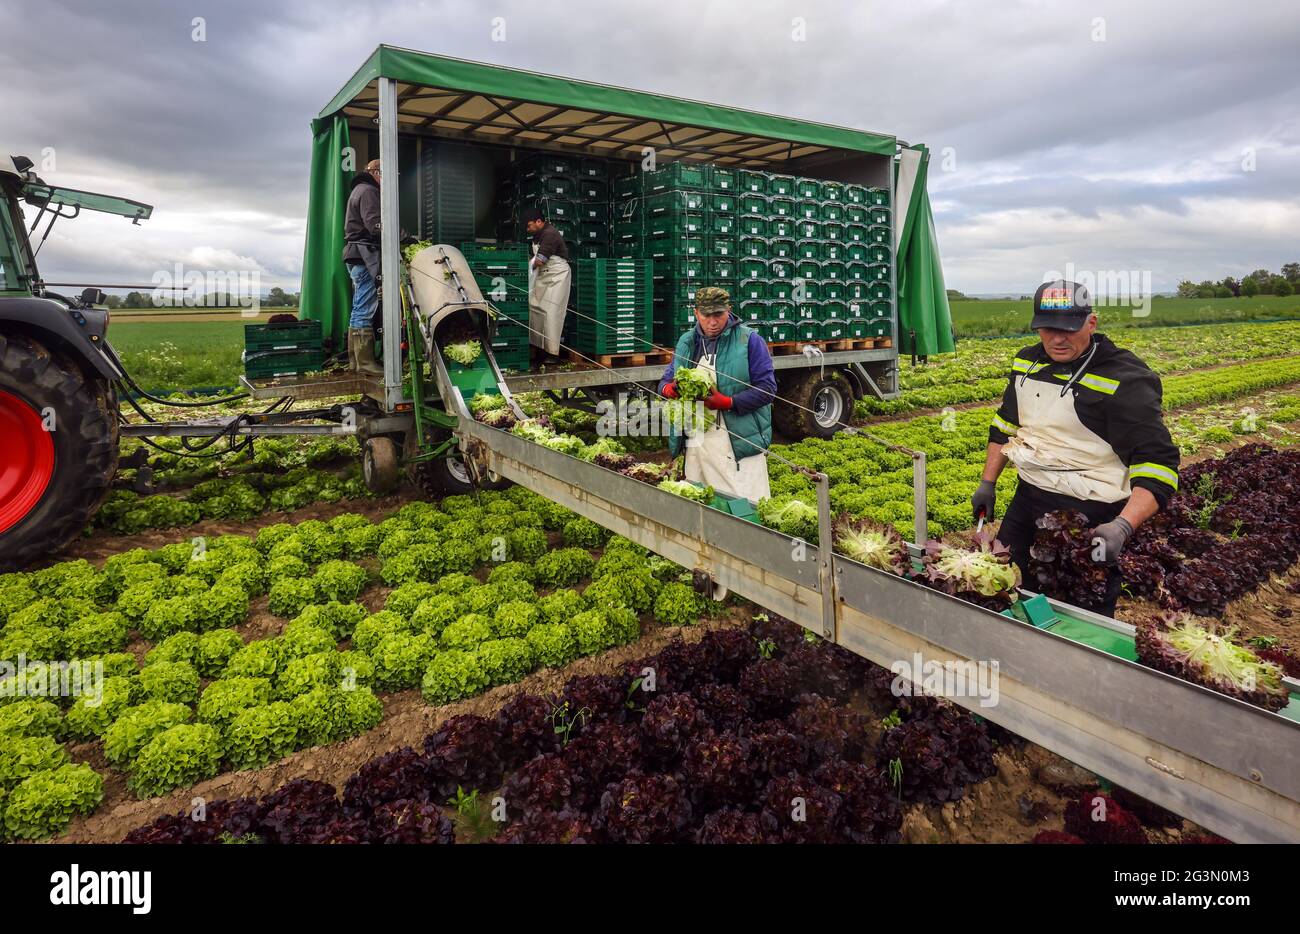 '25.05.2021, Soest, North Rhine-Westphalia, Germany - Vegetable cultivation, harvesters harvesting lettuce, the freshly harvested lettuce heads are wa Stock Photo